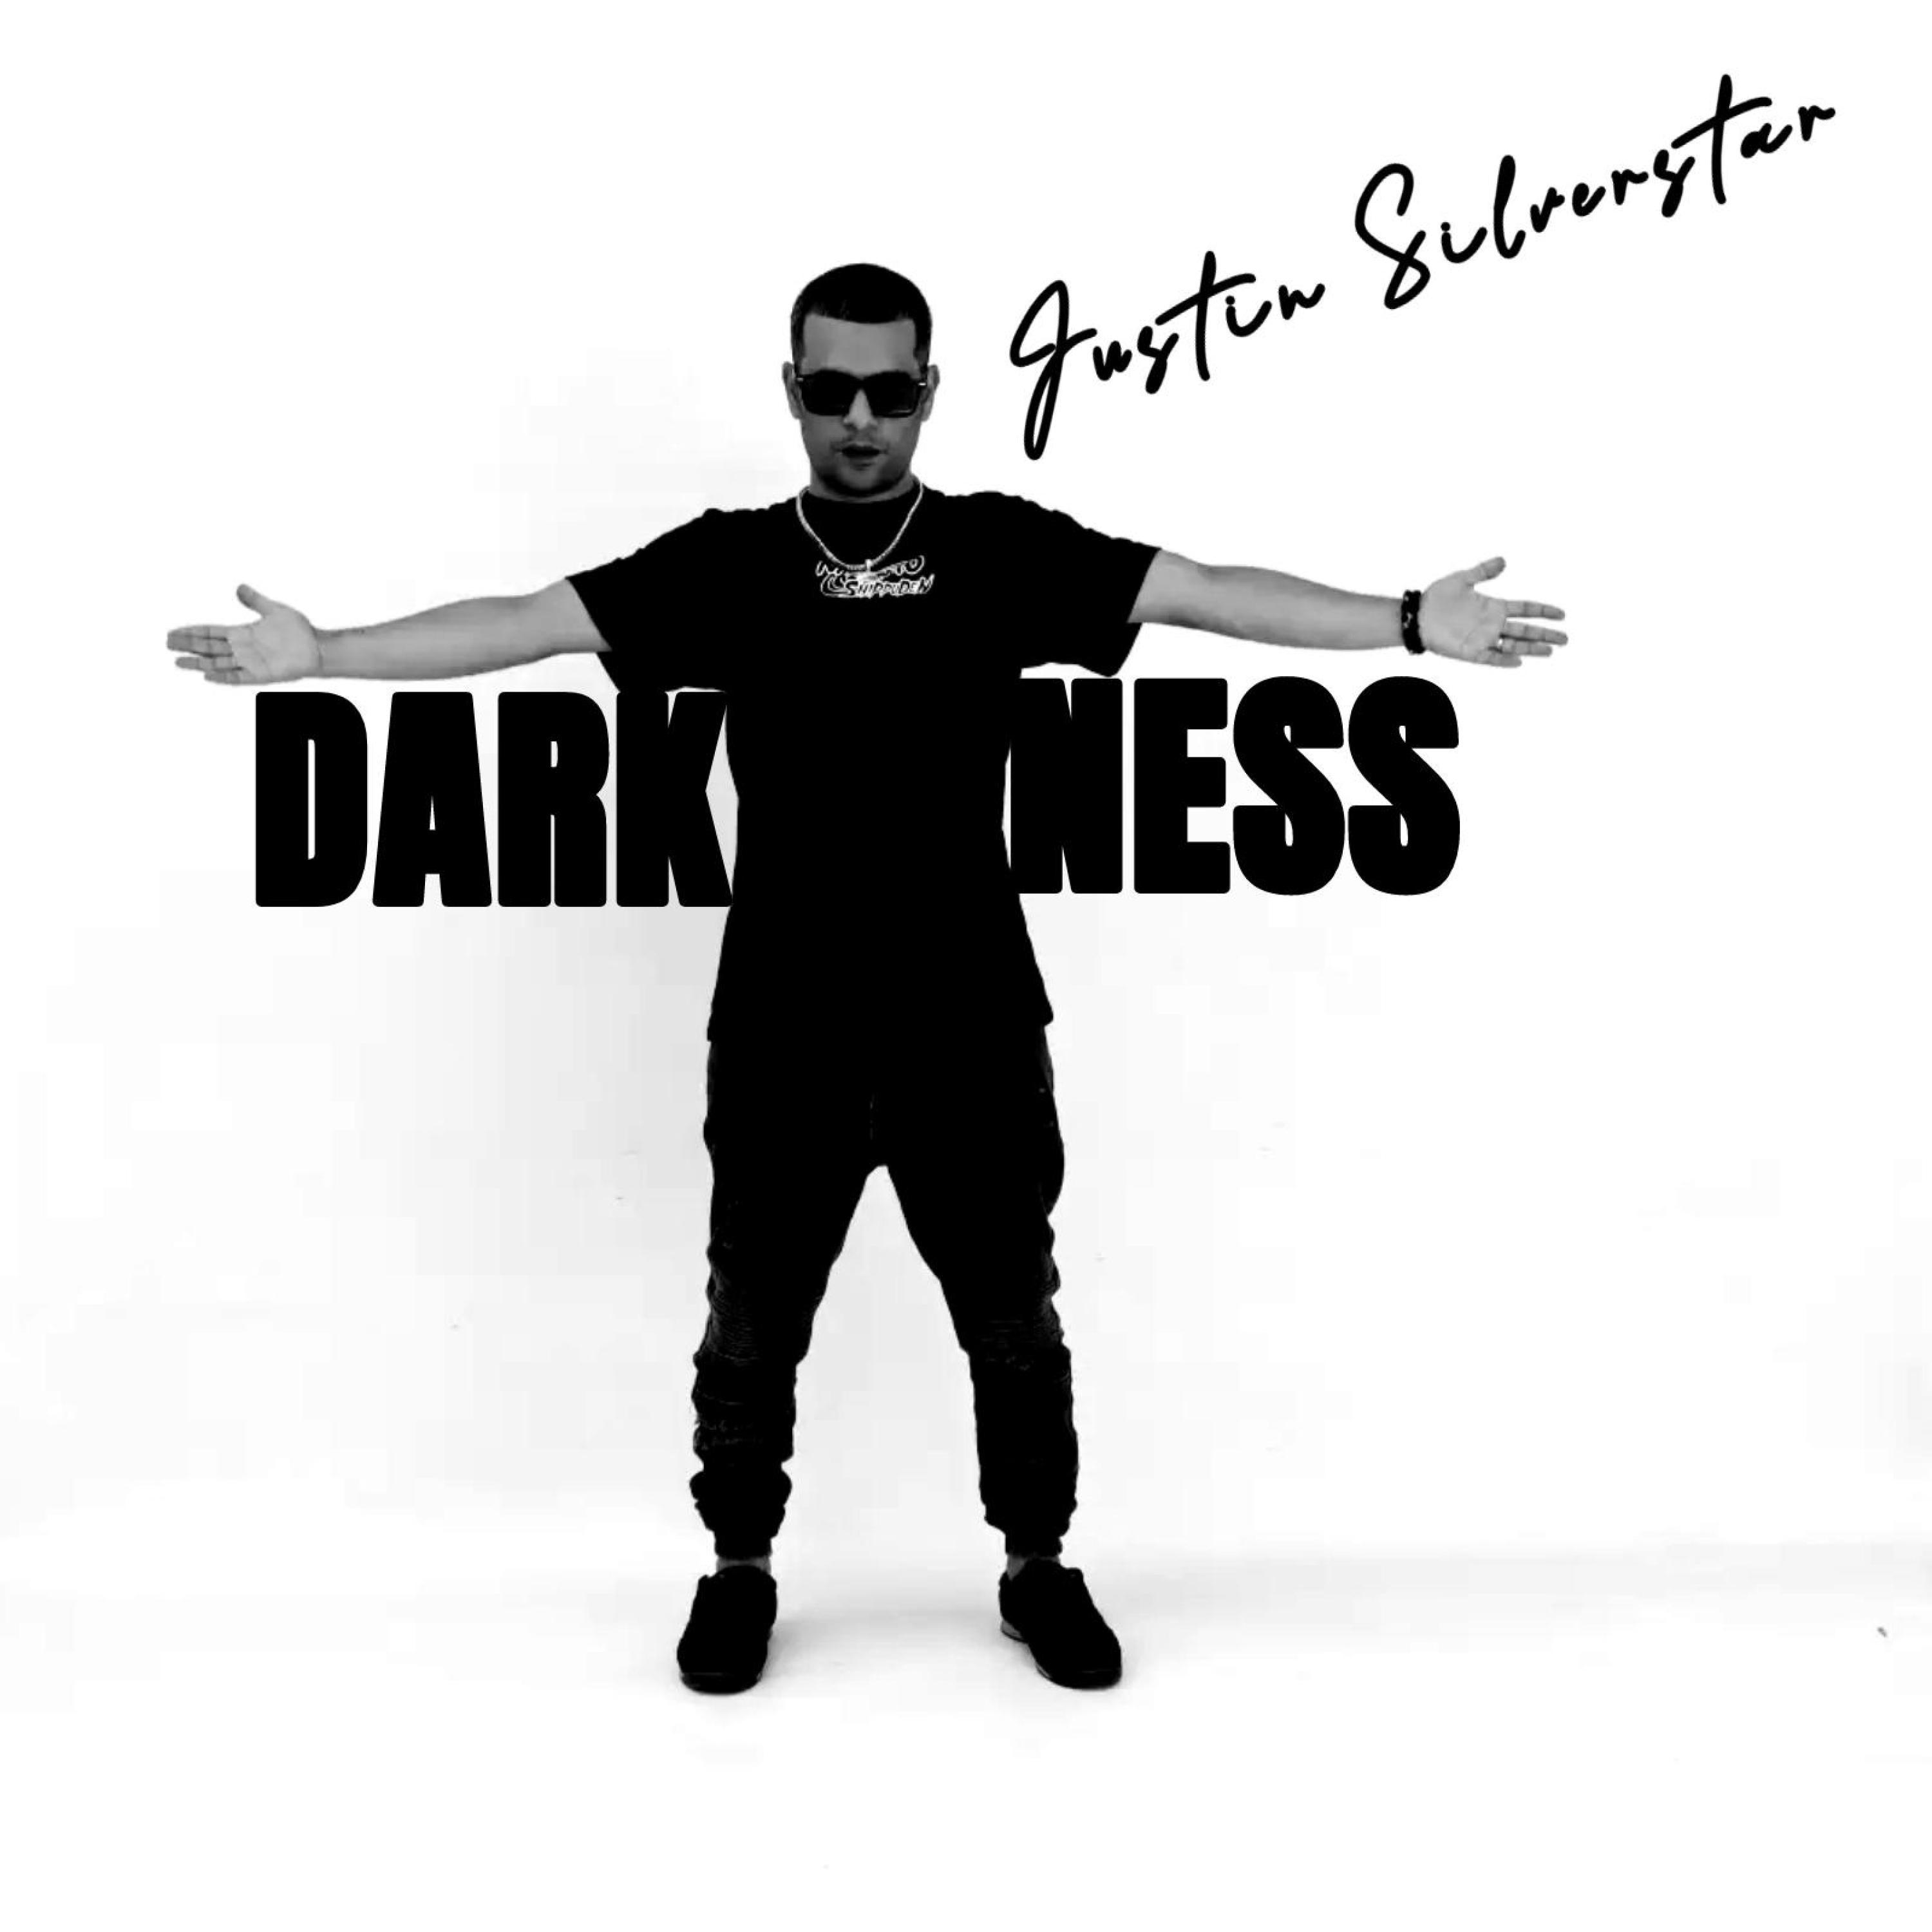 Justin Silverstar - Darkness